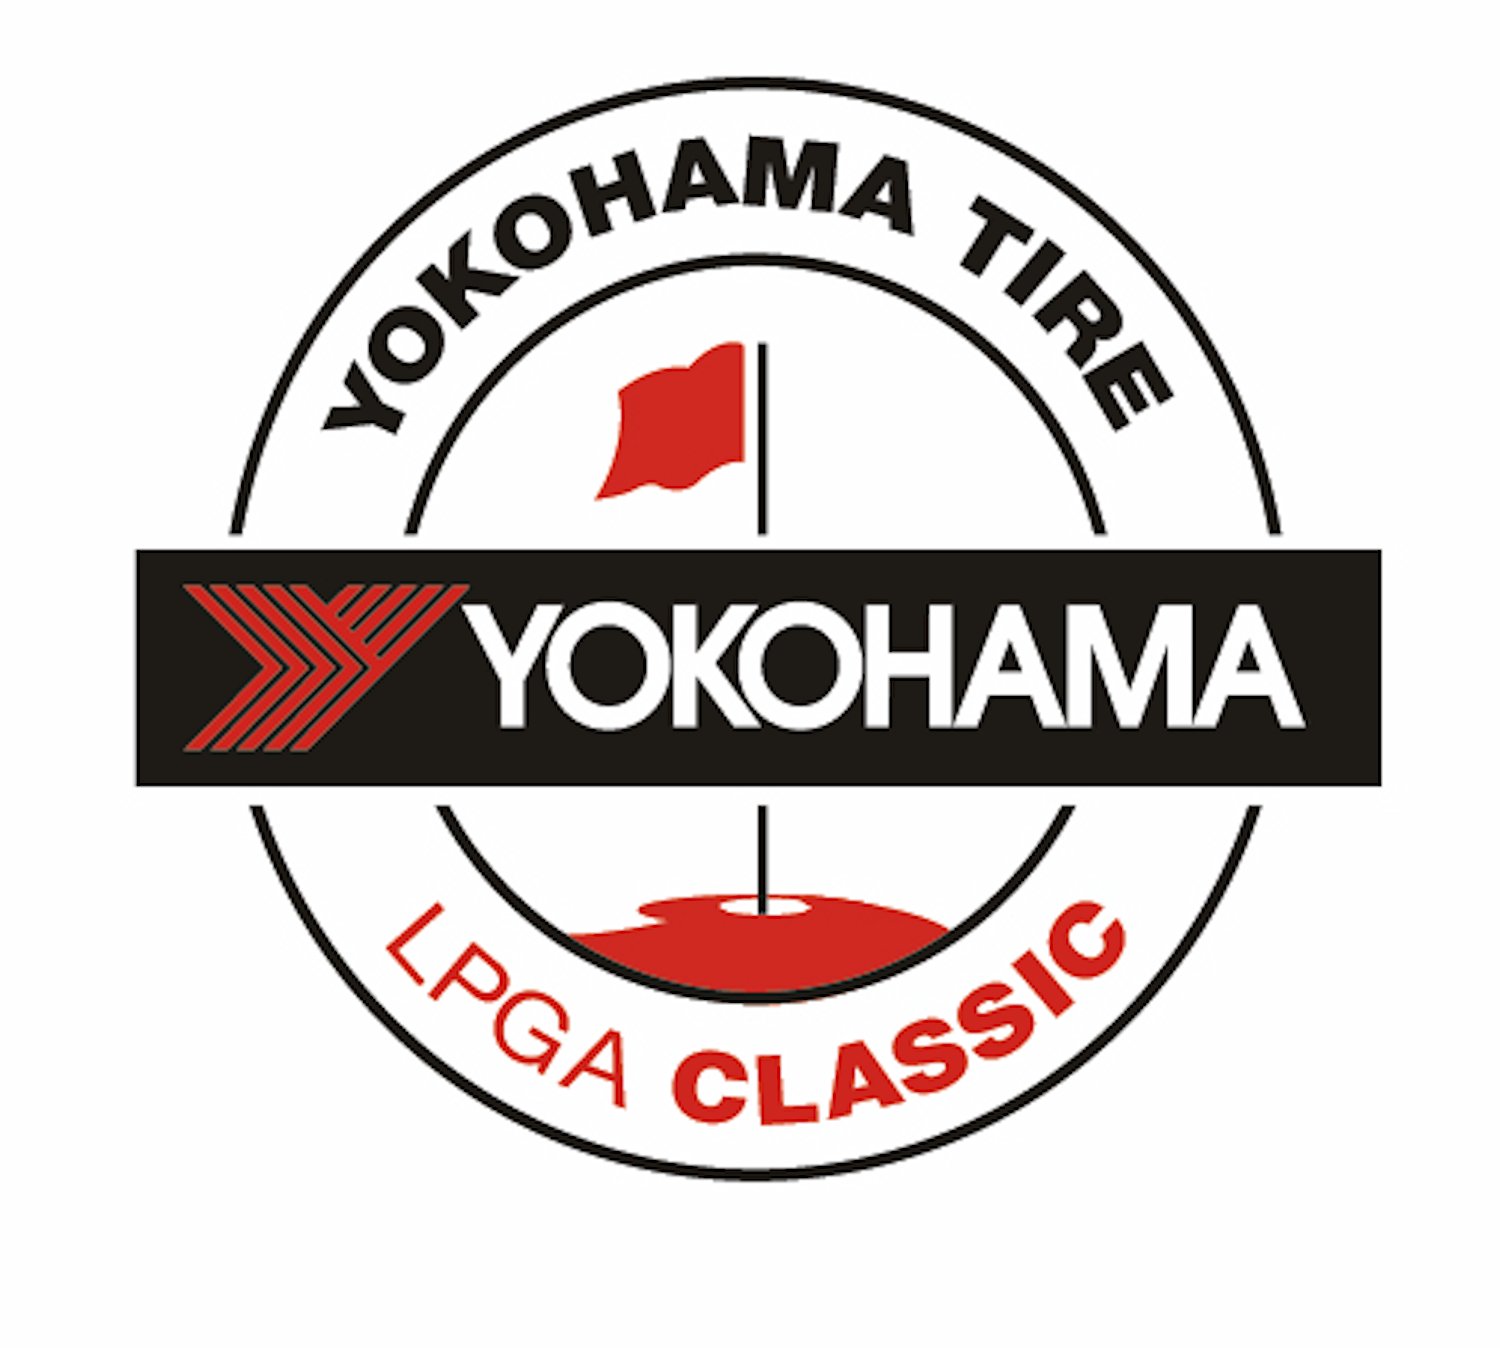 Yokohama title sponsor of LPGA Classic golf tournament